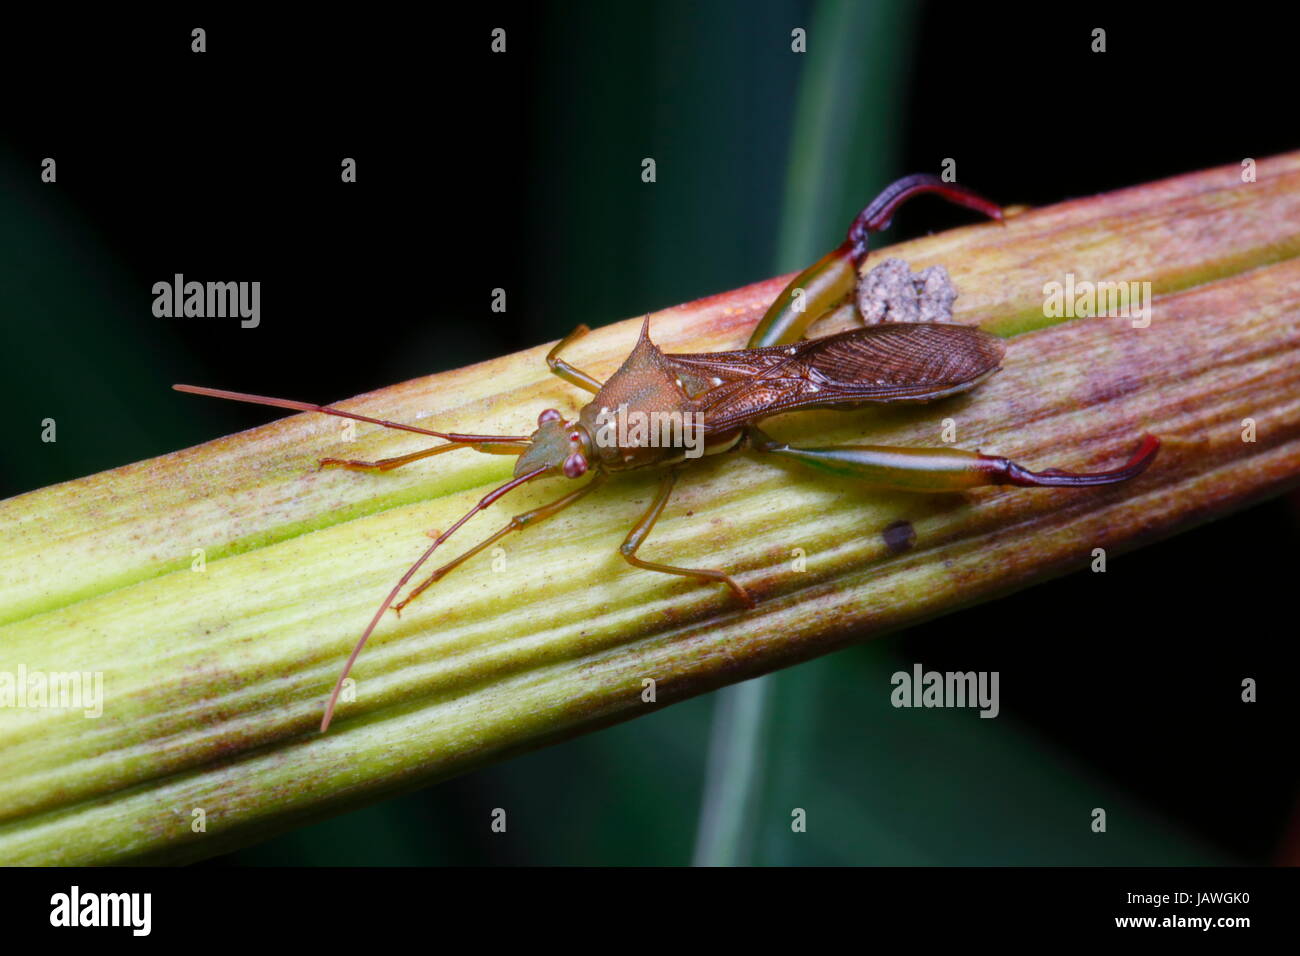 A bow-legged bug, Hyalymenus longispinus, crawling on a plant stem. Stock Photo